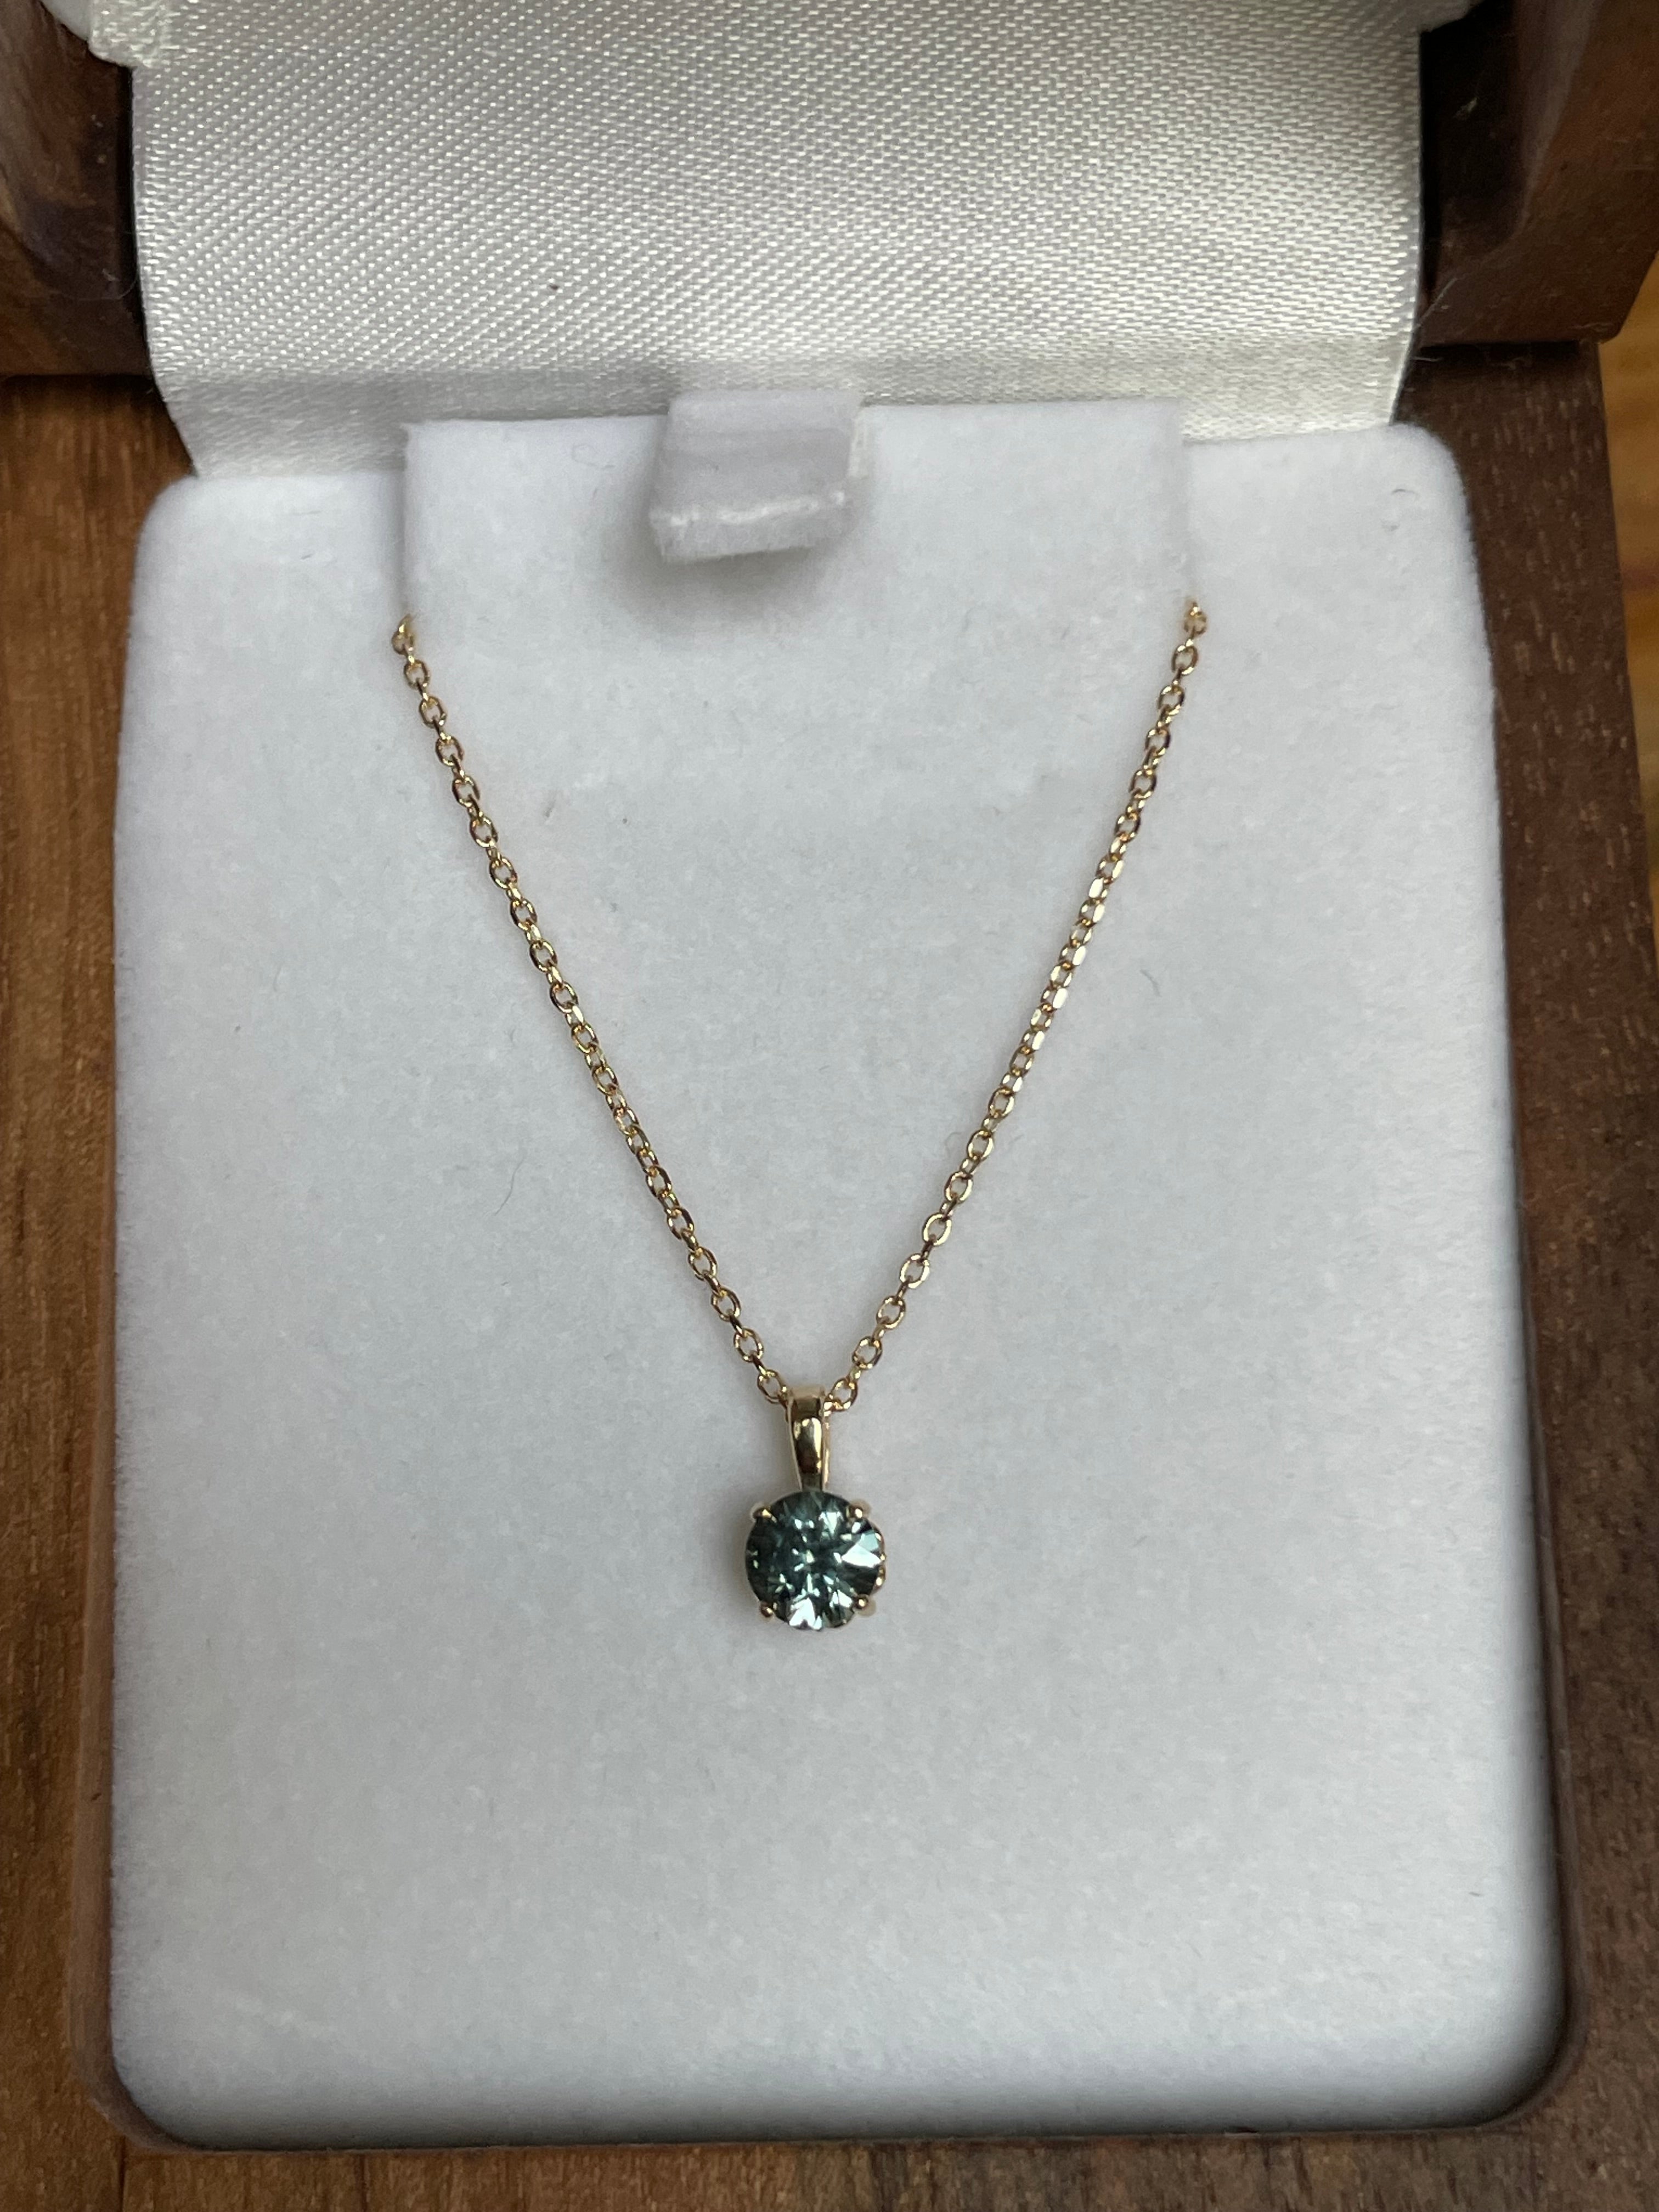 Montana Sapphire Necklace - Color Change Light Ocean Blue Green to Silvery Green Fleur De Lis Setting 14k Yellow Gold